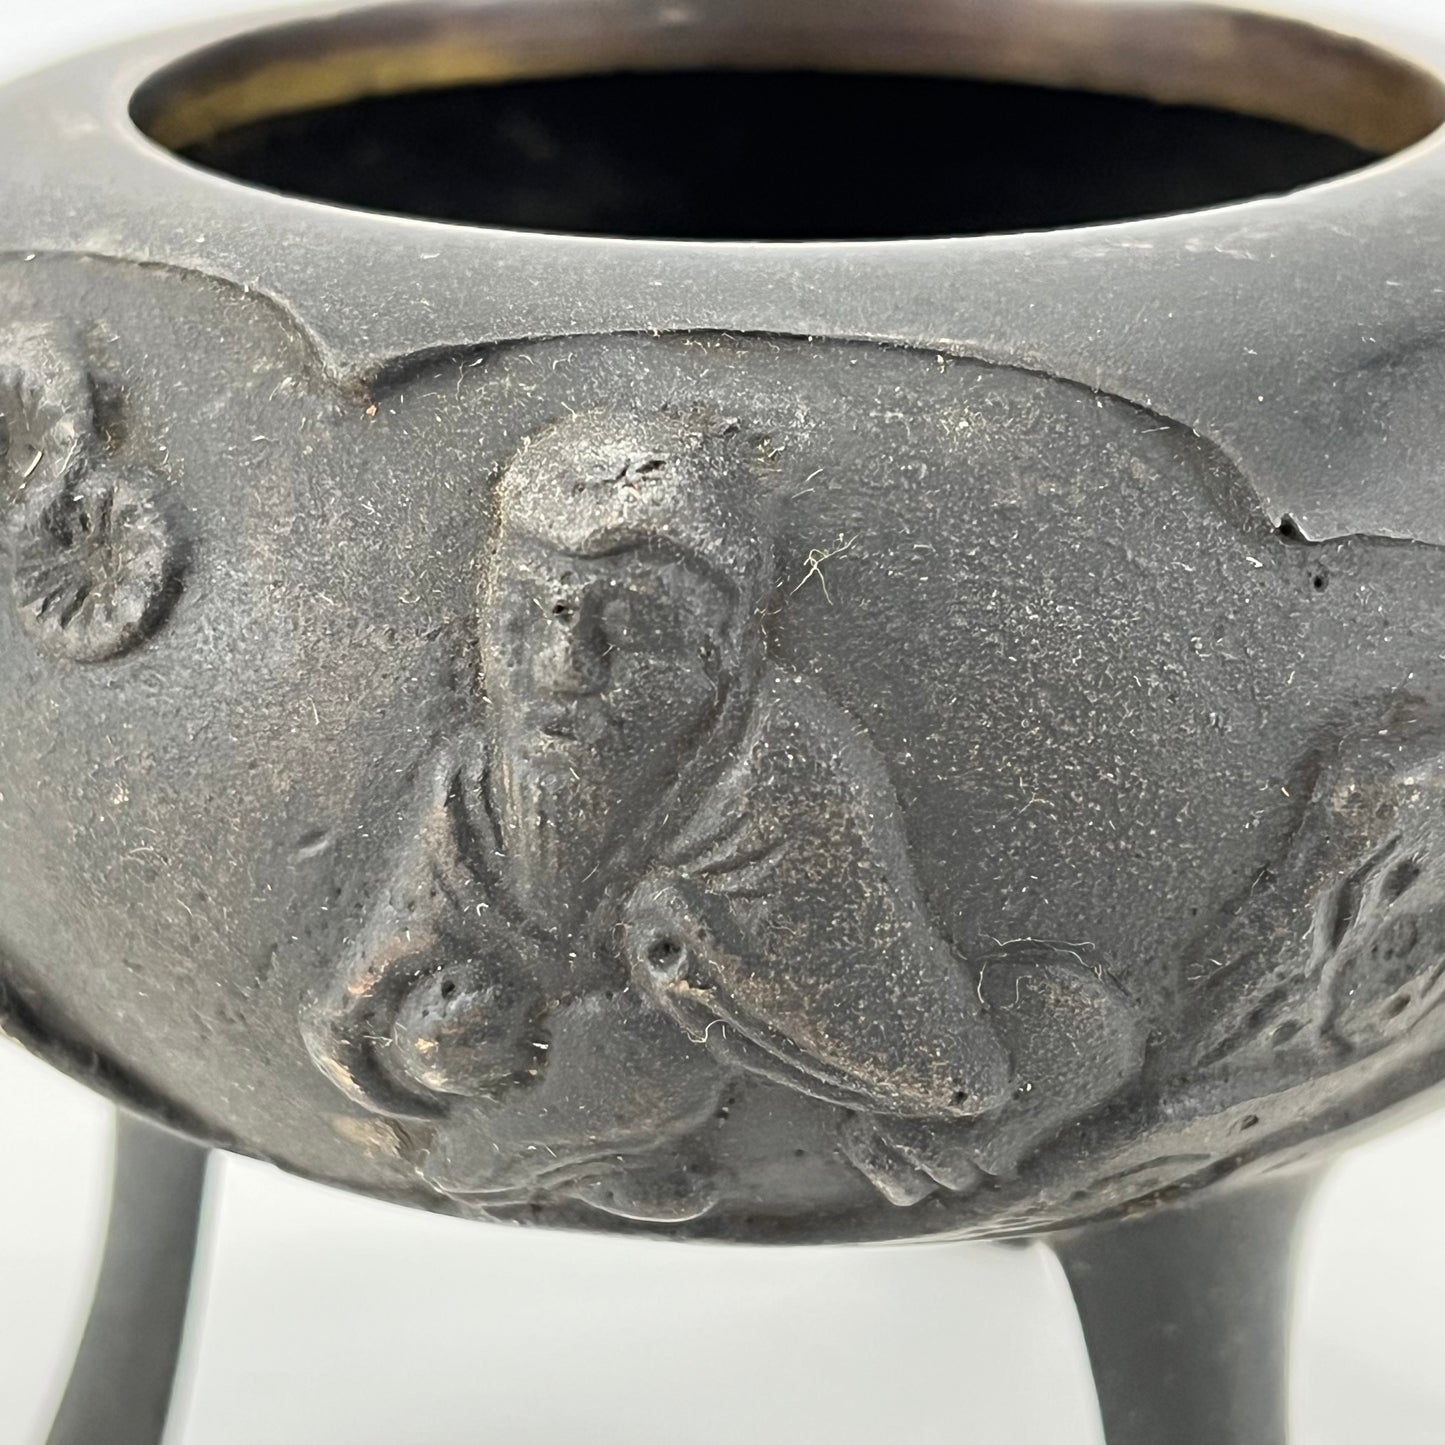 Antique Bronze Koro Incense Burner w/ Teachers & Elephant handles & Rings 3” H